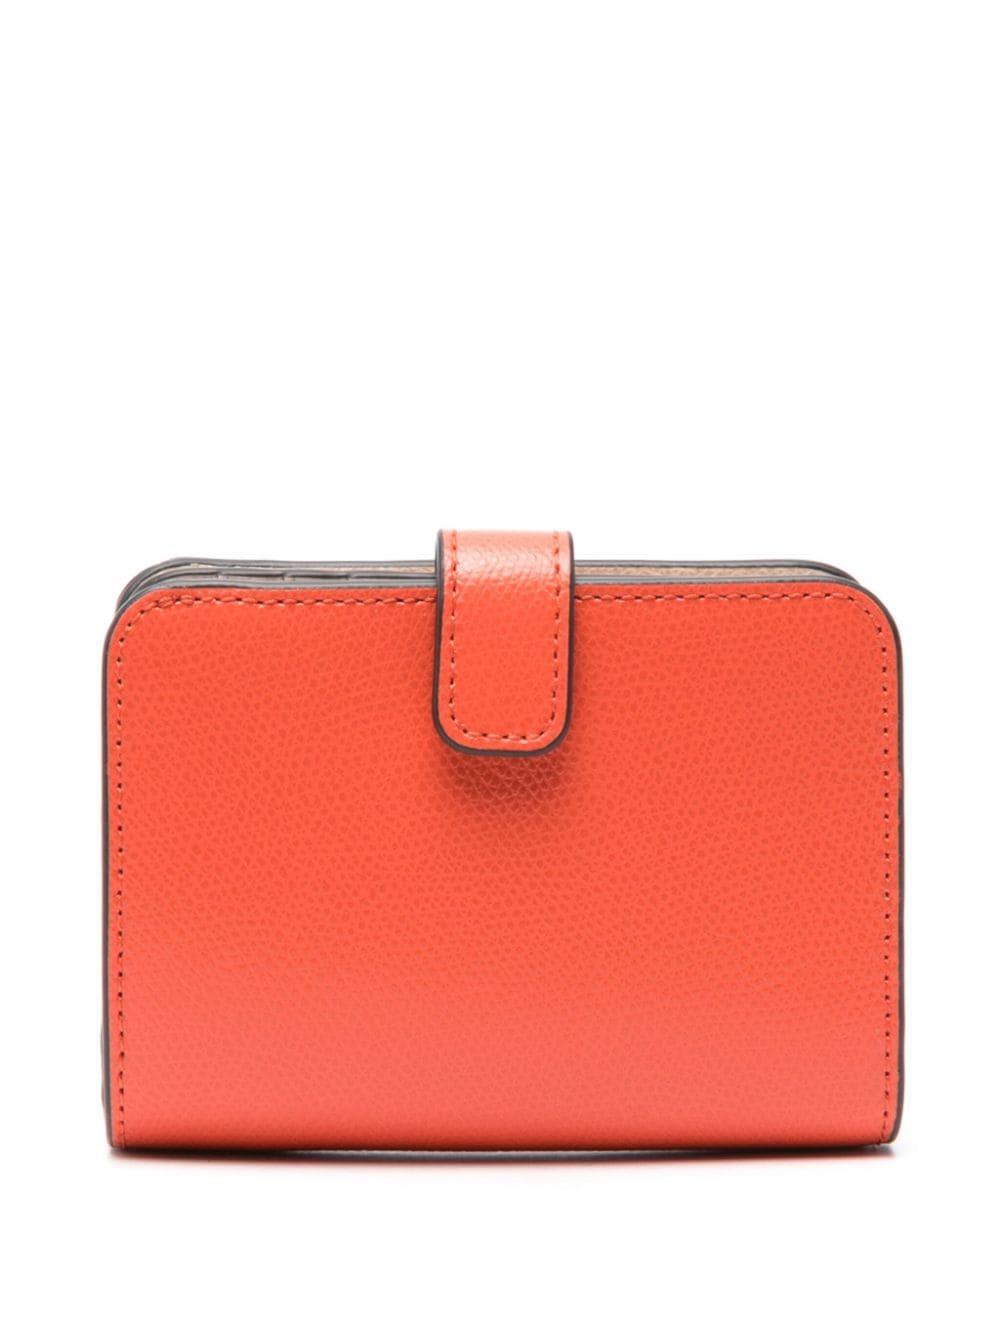 Furla medium Camelia leather wallet - Orange